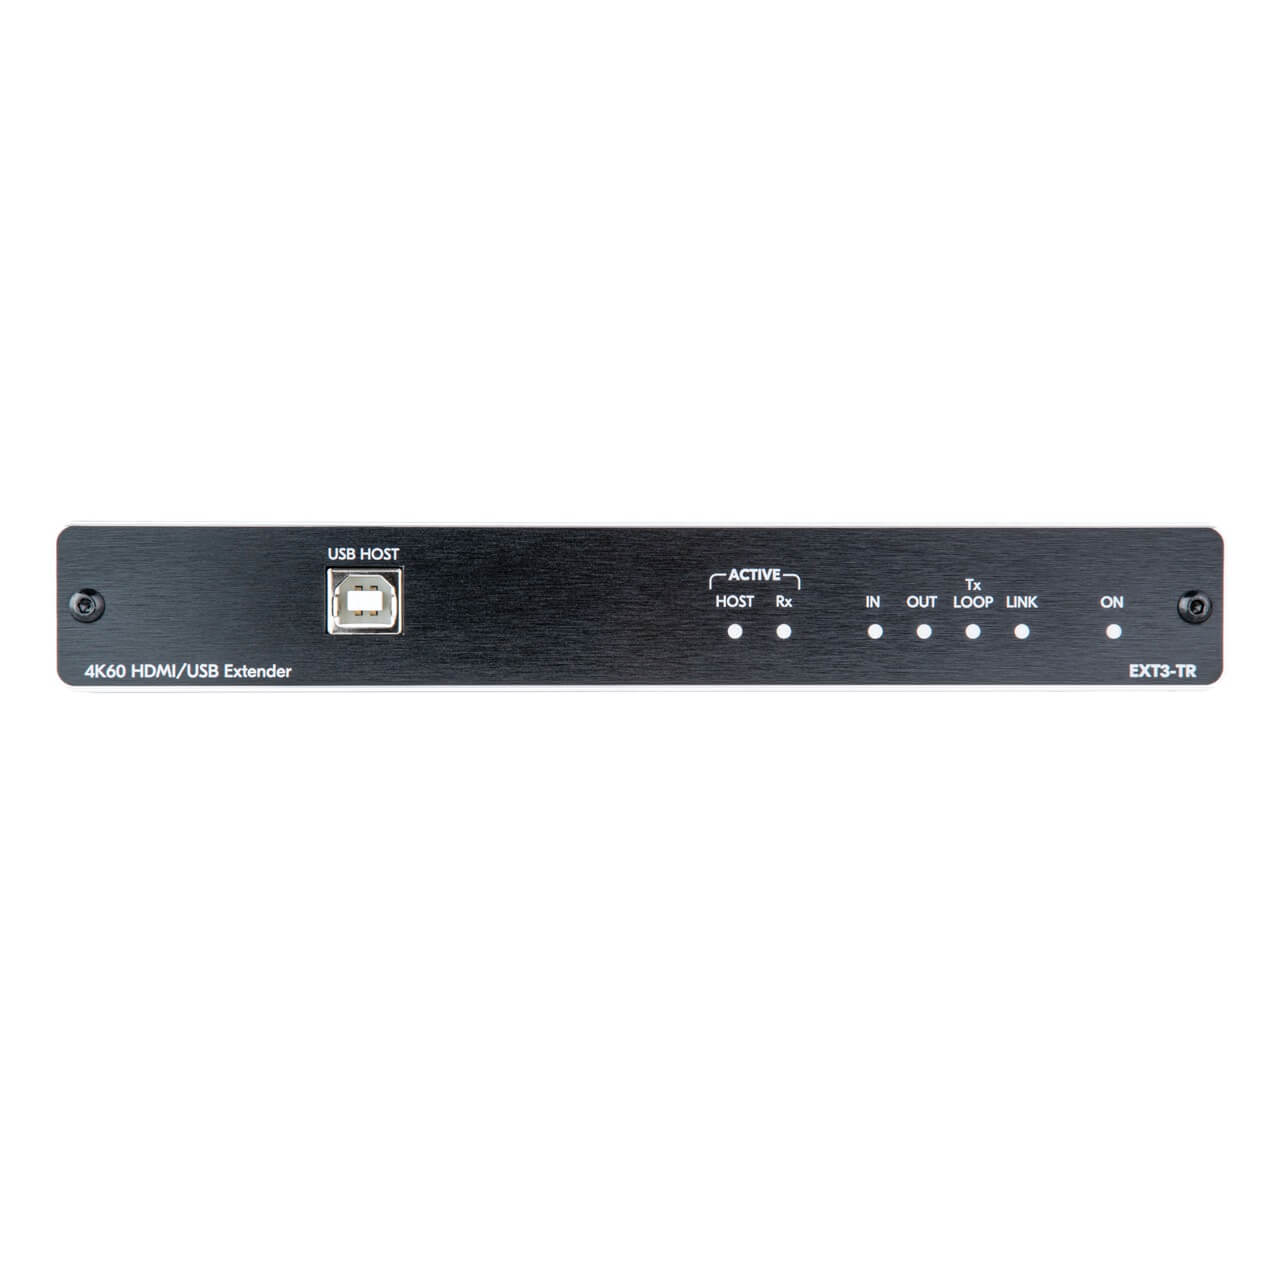 Kramer EXT3-TR - 4K60 HDMI and USB 2.0 HDBaseT Extender, front